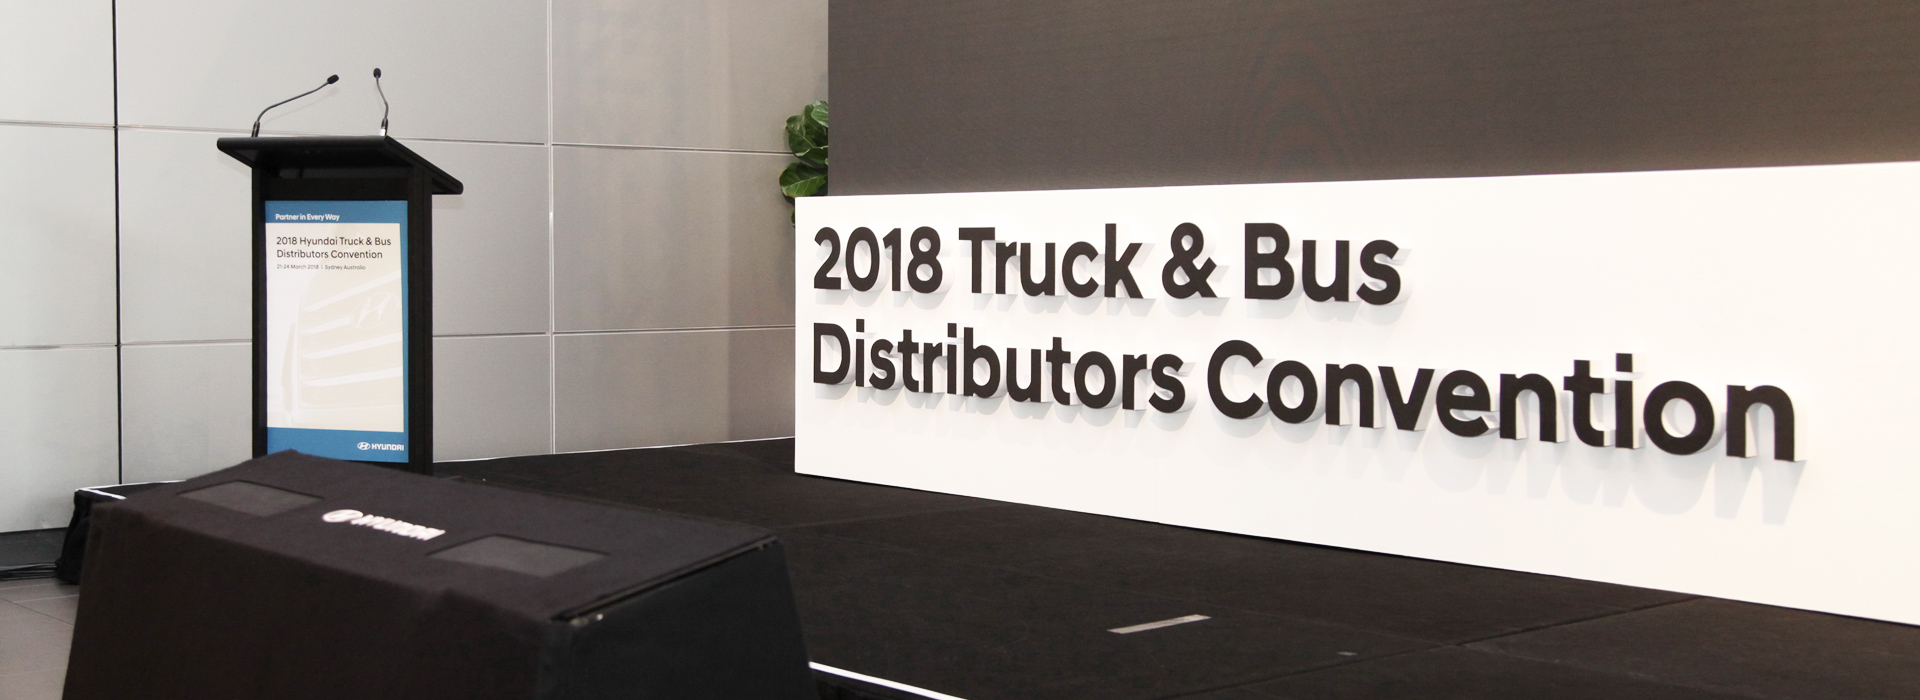 Hyundai Truck and Bus Distributors Convention 2018 Slider Image1